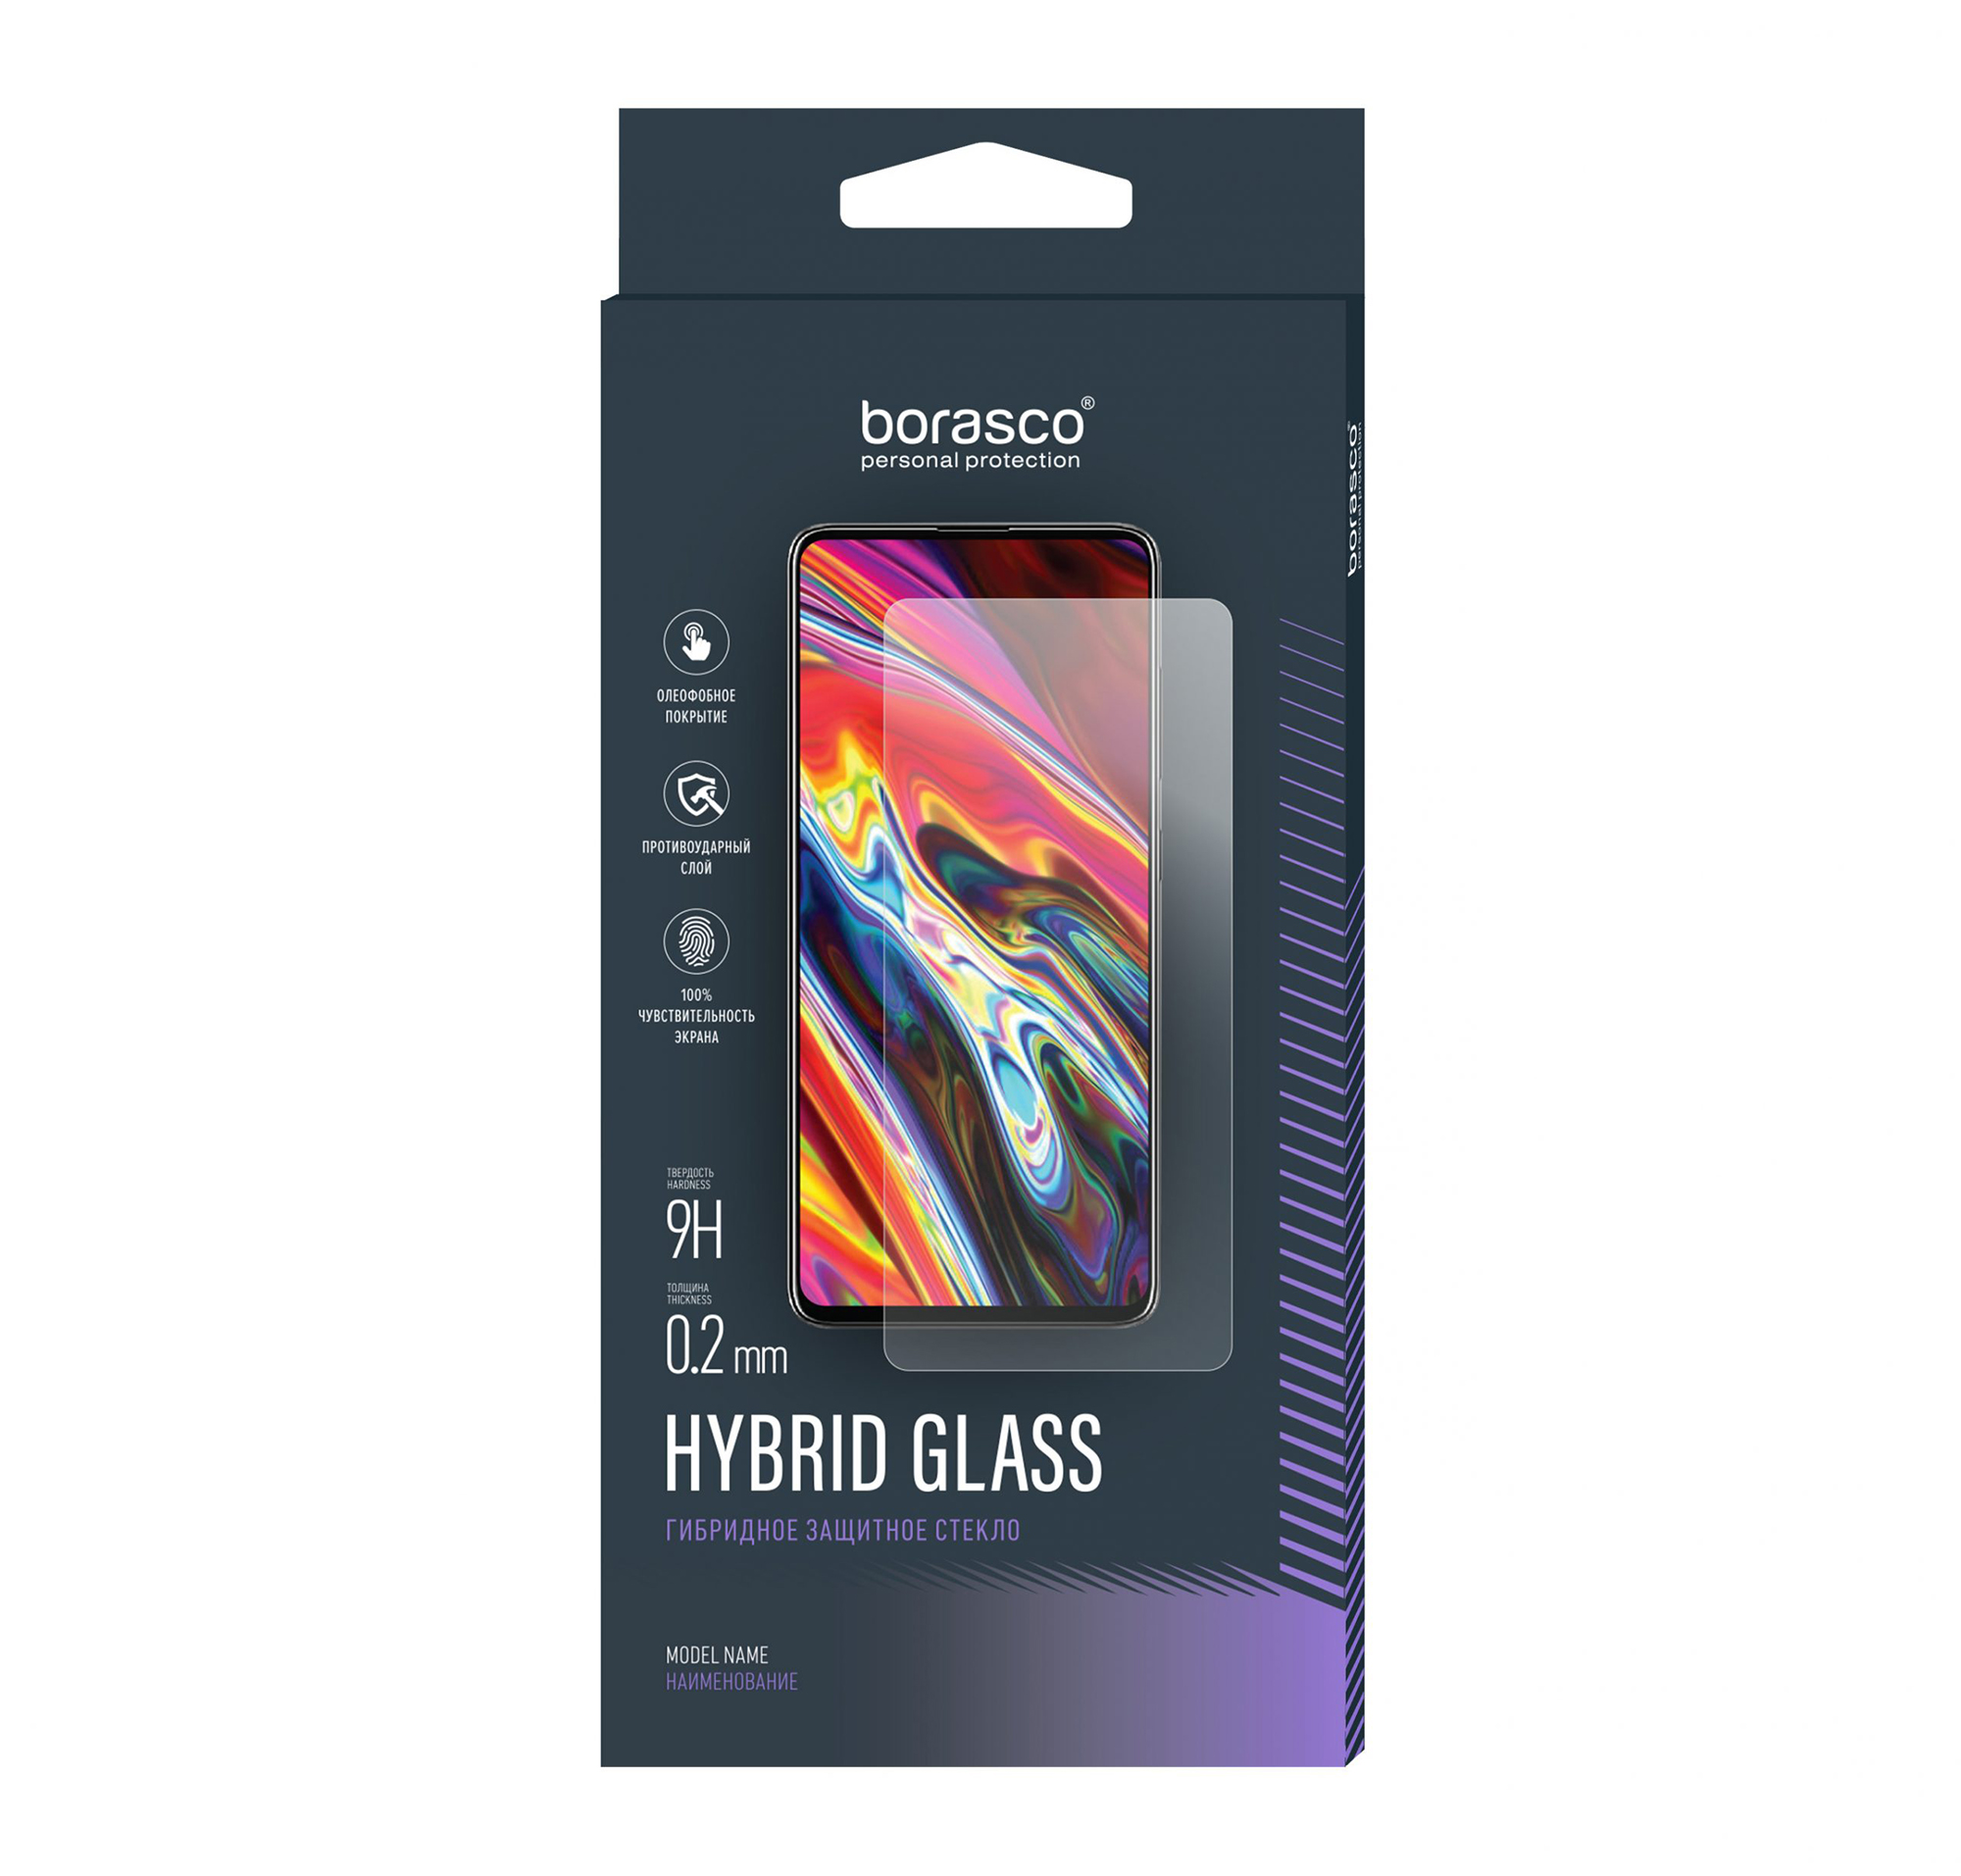 Защитное стекло Hybrid Glass для Asus ZenFone 2 (ZE500KL) цена и фото